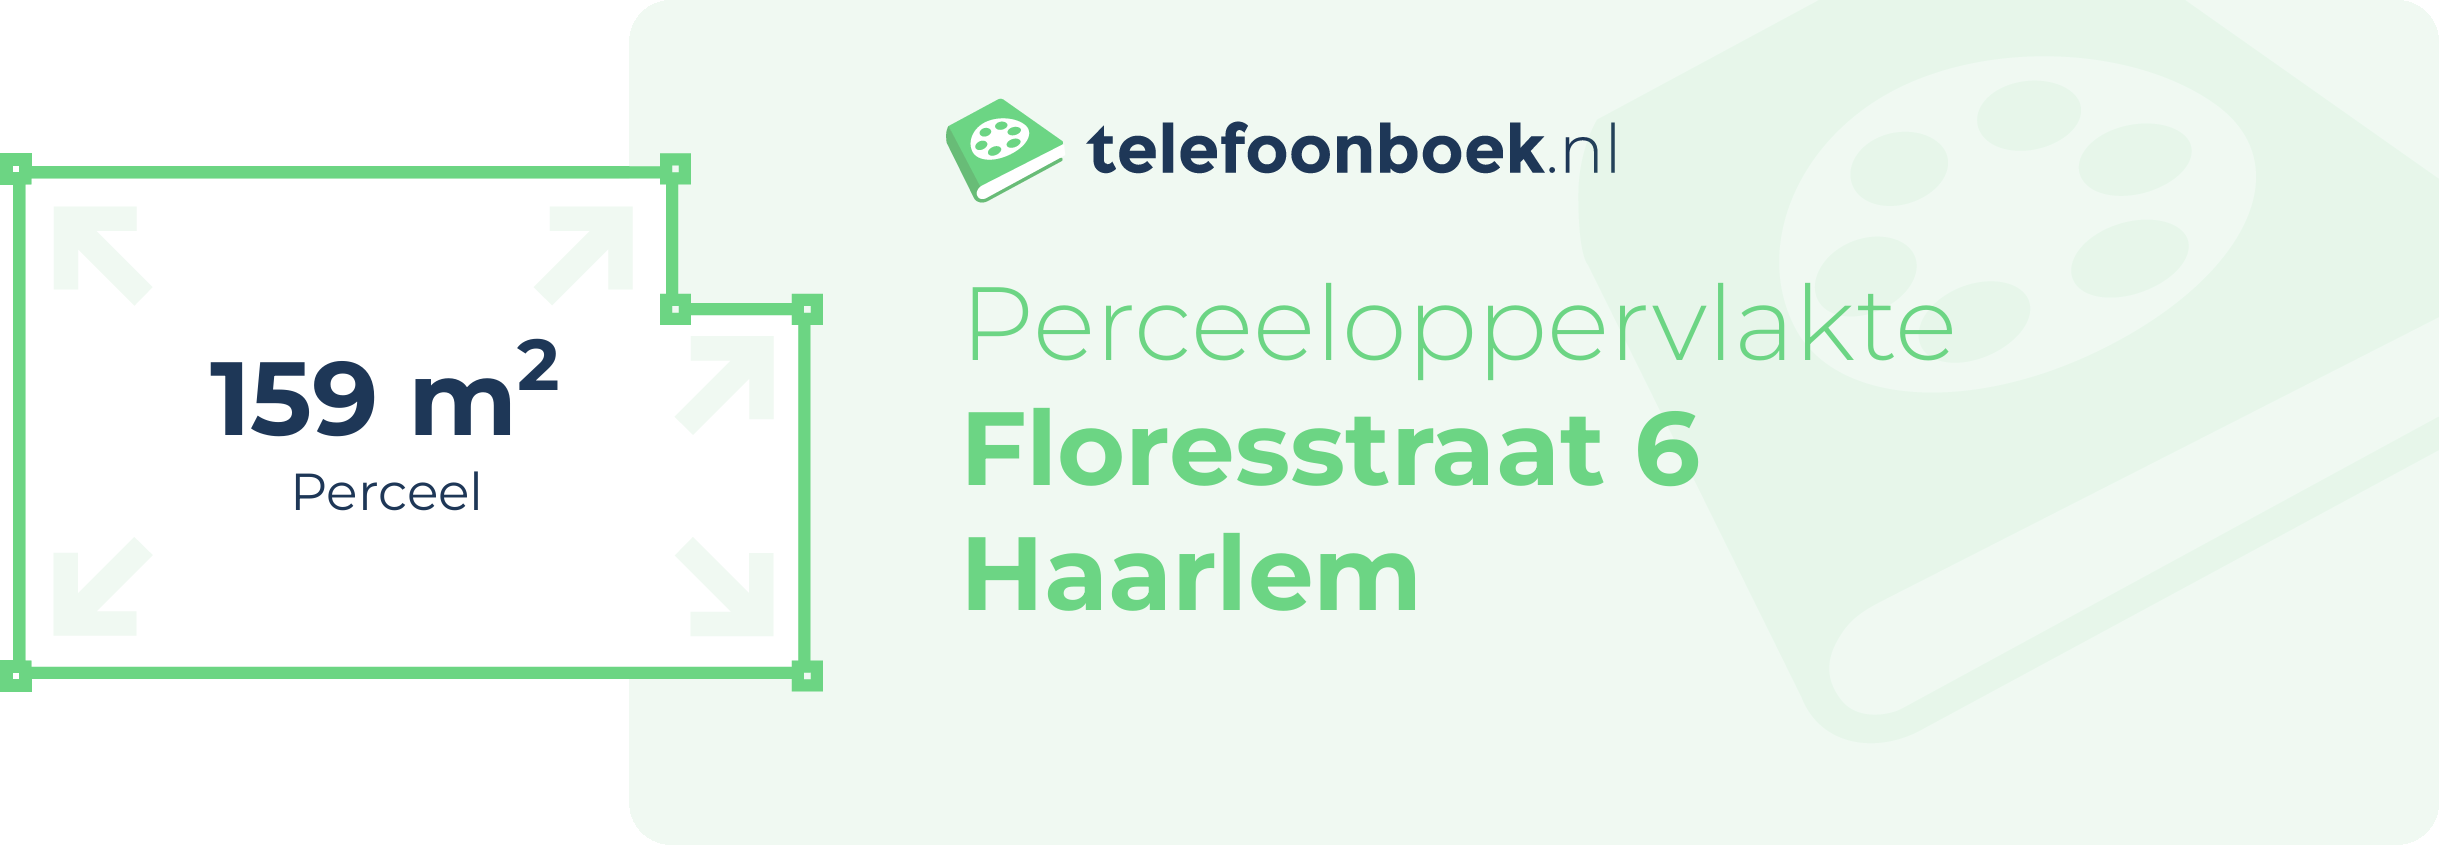 Perceeloppervlakte Floresstraat 6 Haarlem